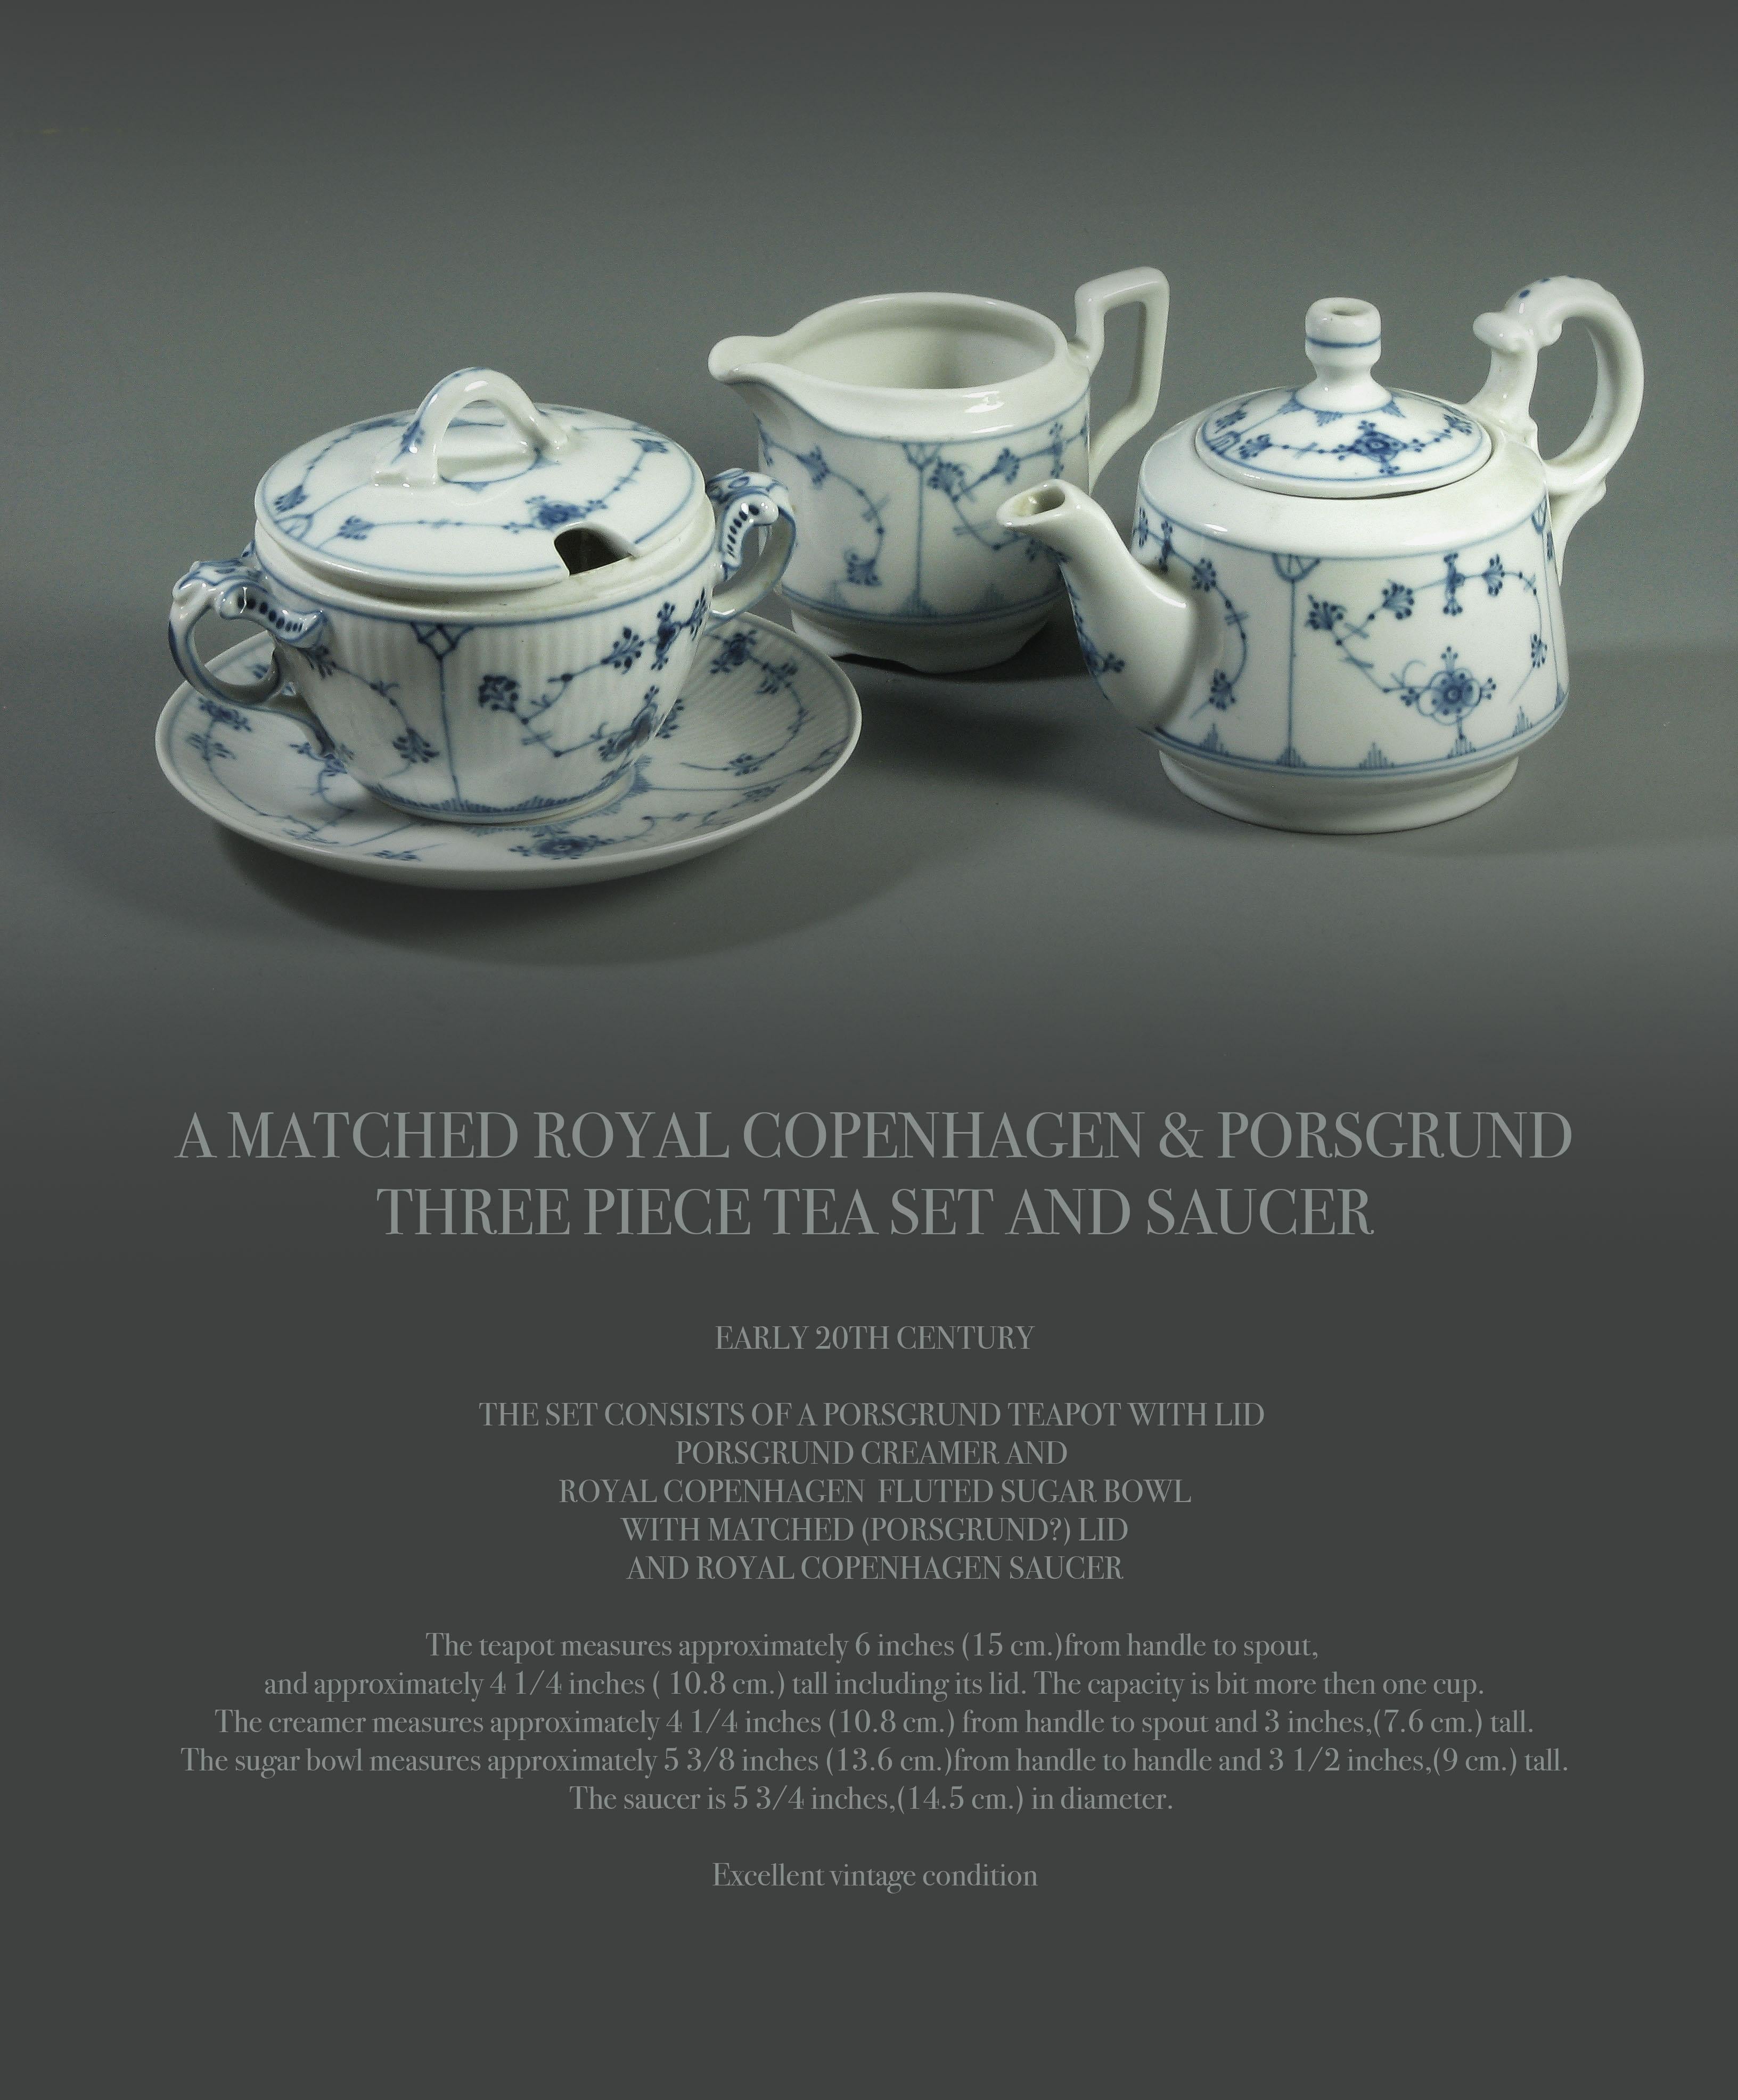 Matched Royal Copenhagen & Porsgrund Three Piece Tea Set and Saucer For Sale 1